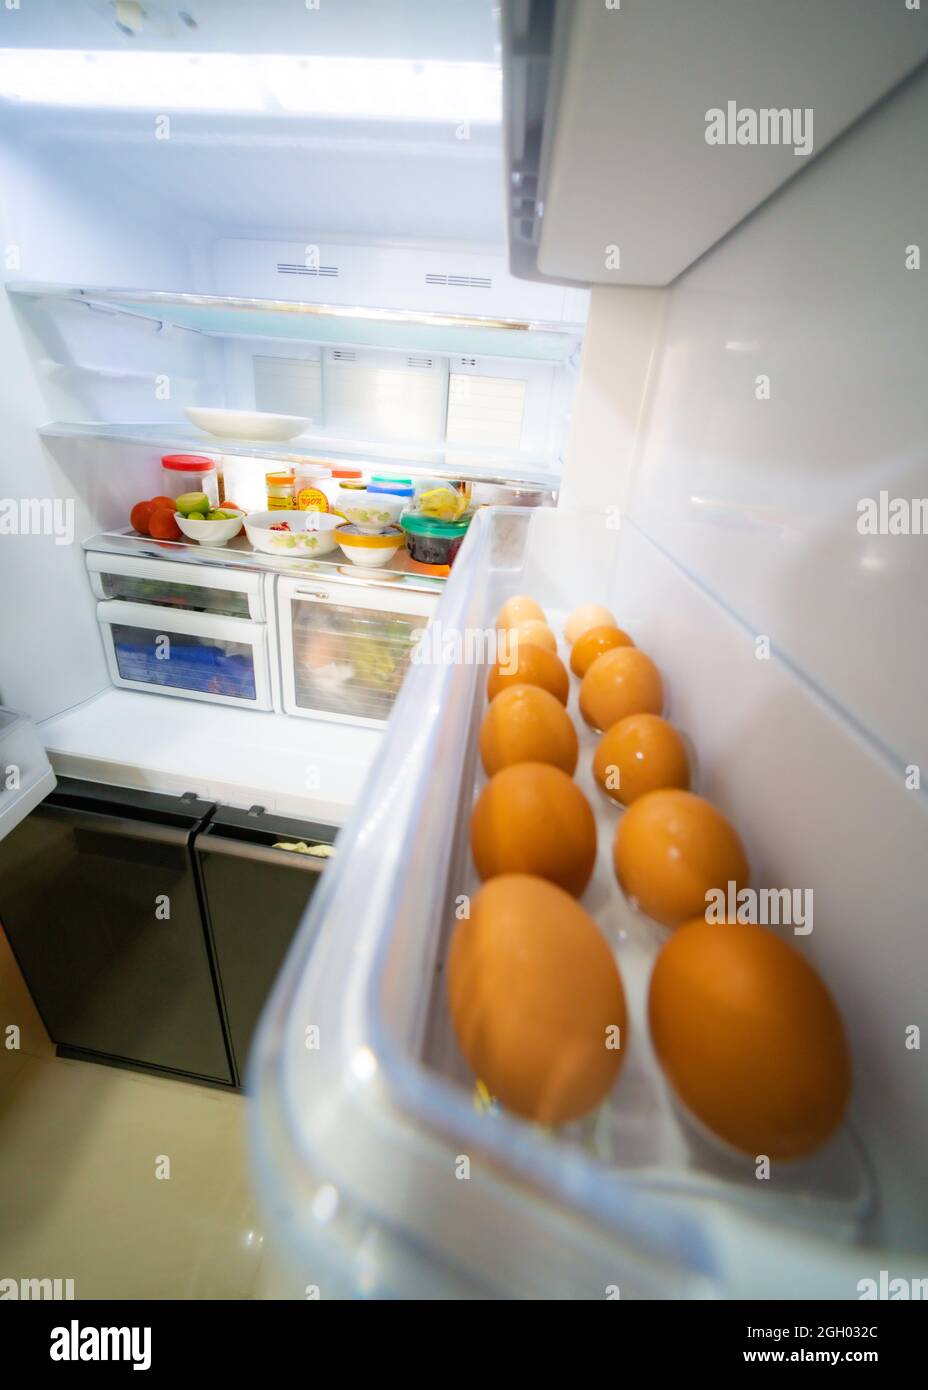 https://c8.alamy.com/comp/2GH032C/food-inside-refrigerator-in-the-kitchen-2GH032C.jpg